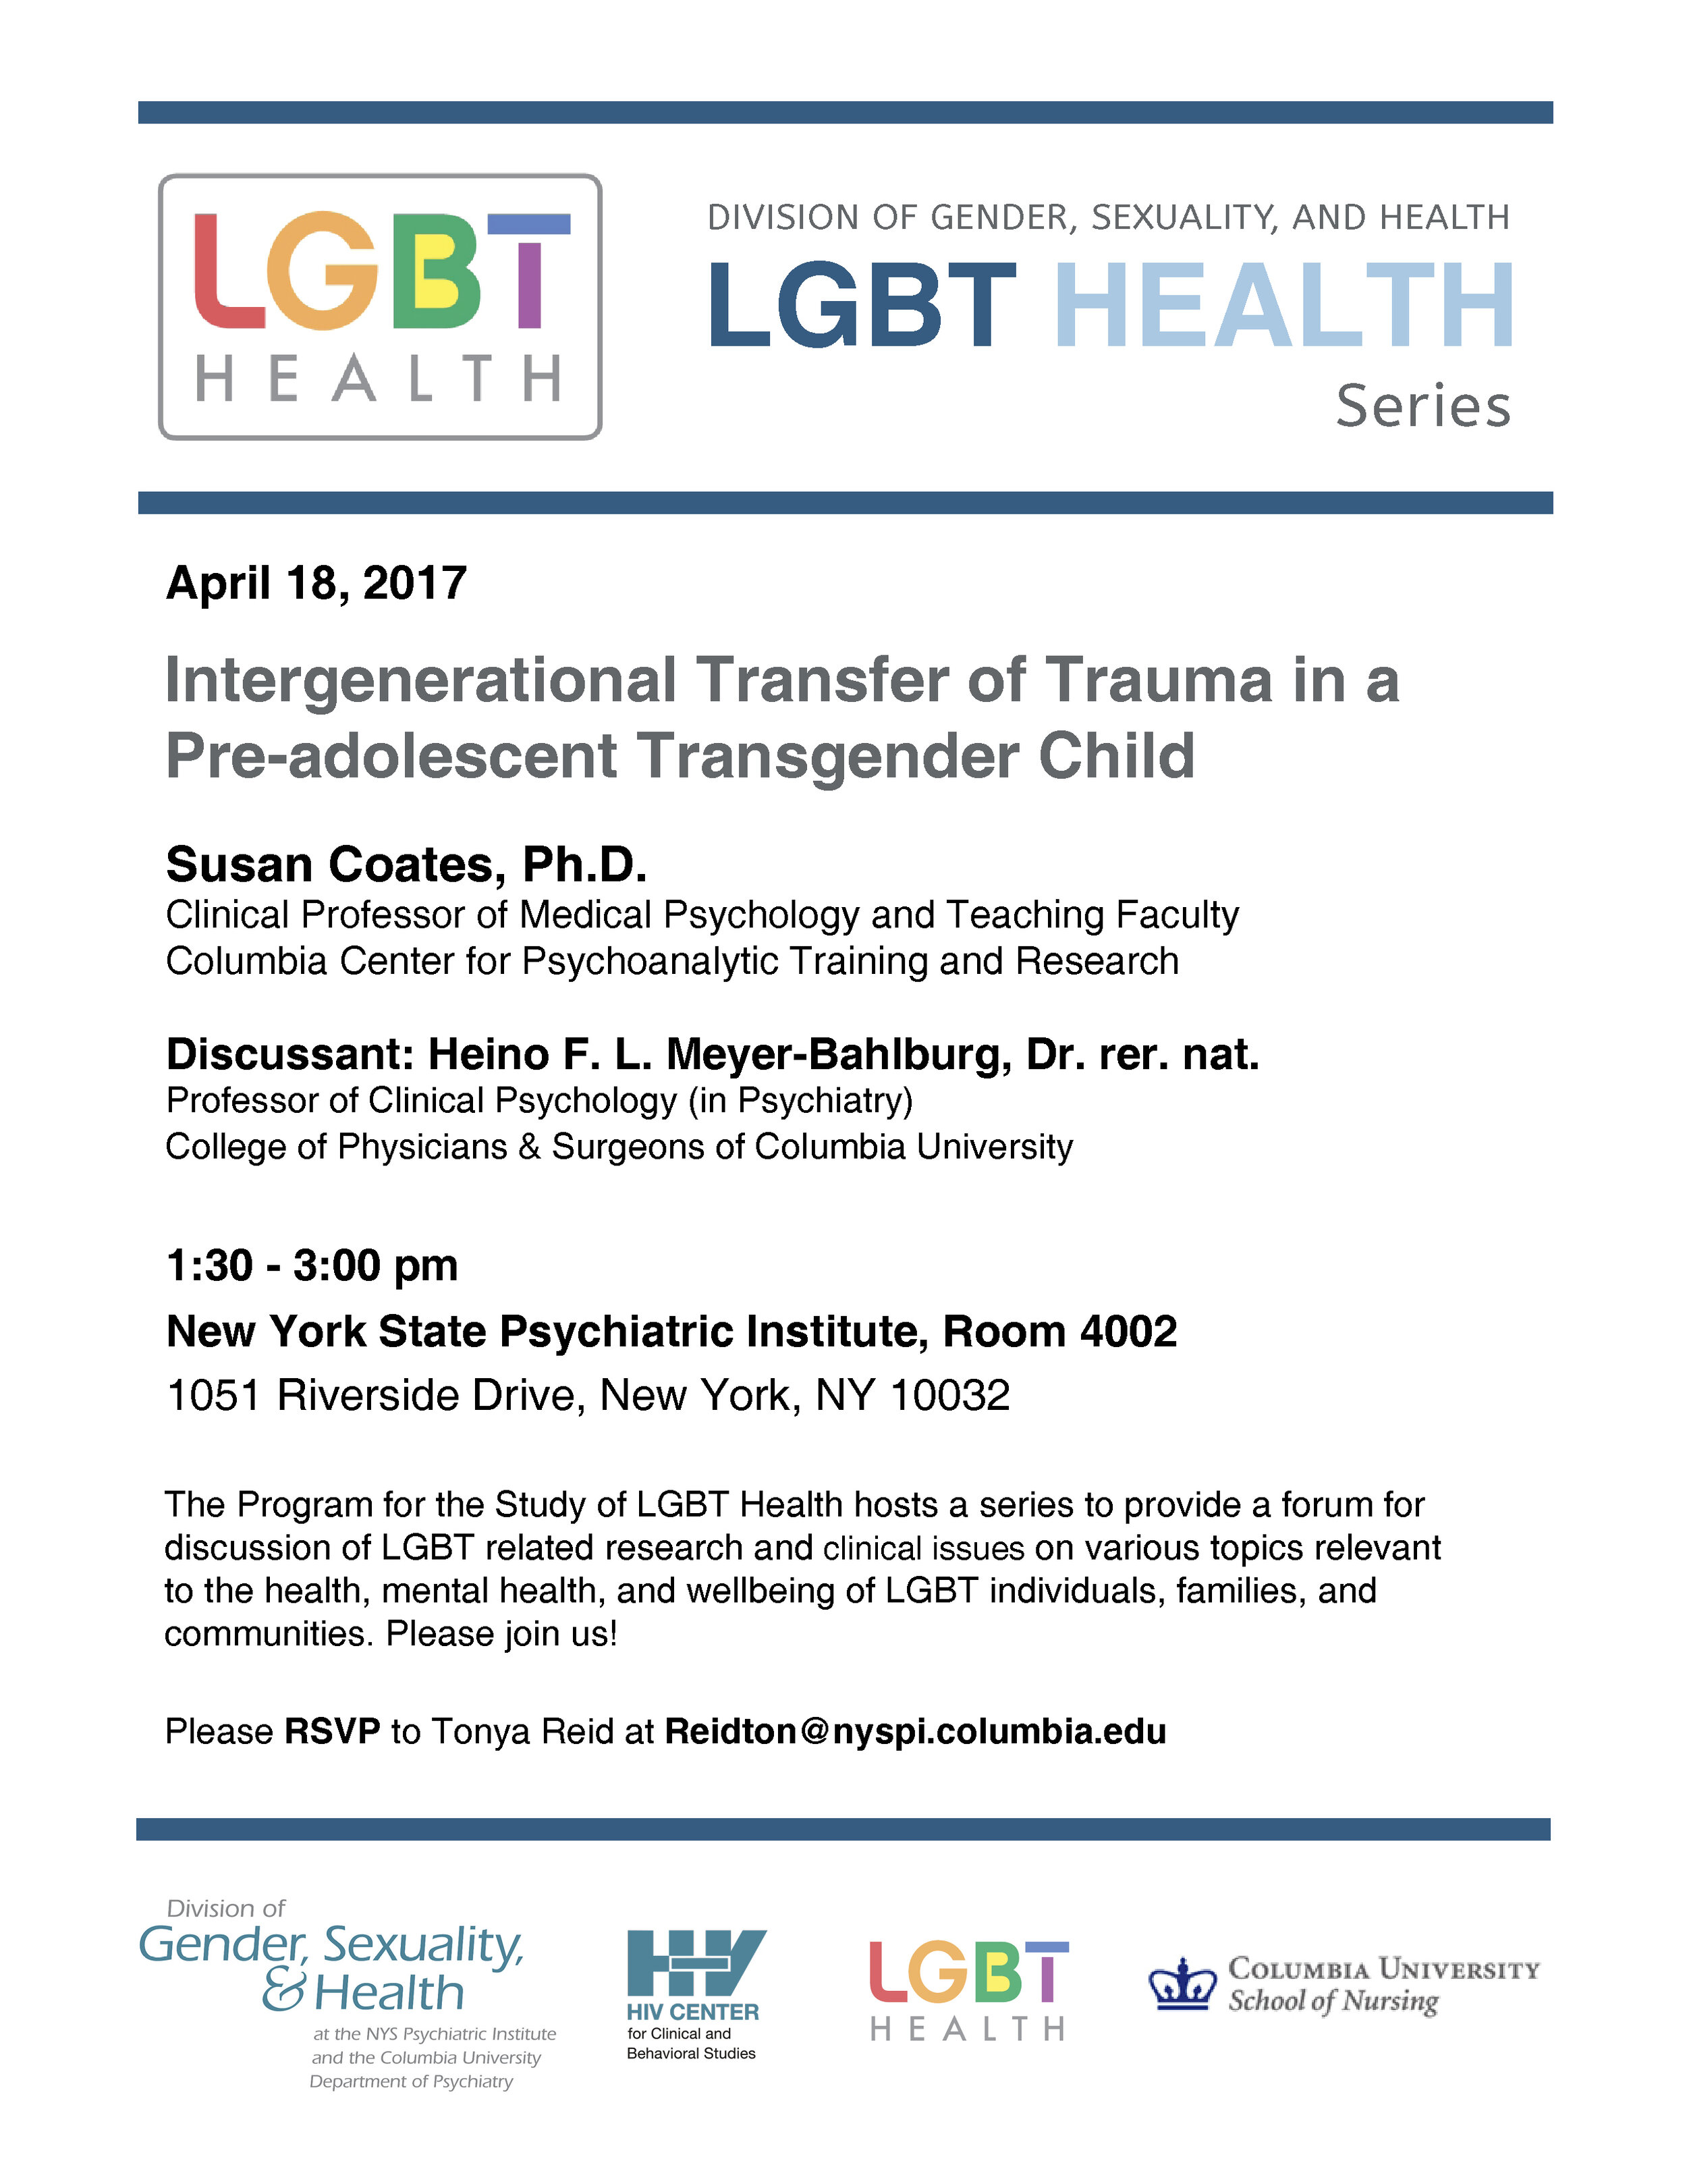 LGBT Health Series April 18 2017.jpg